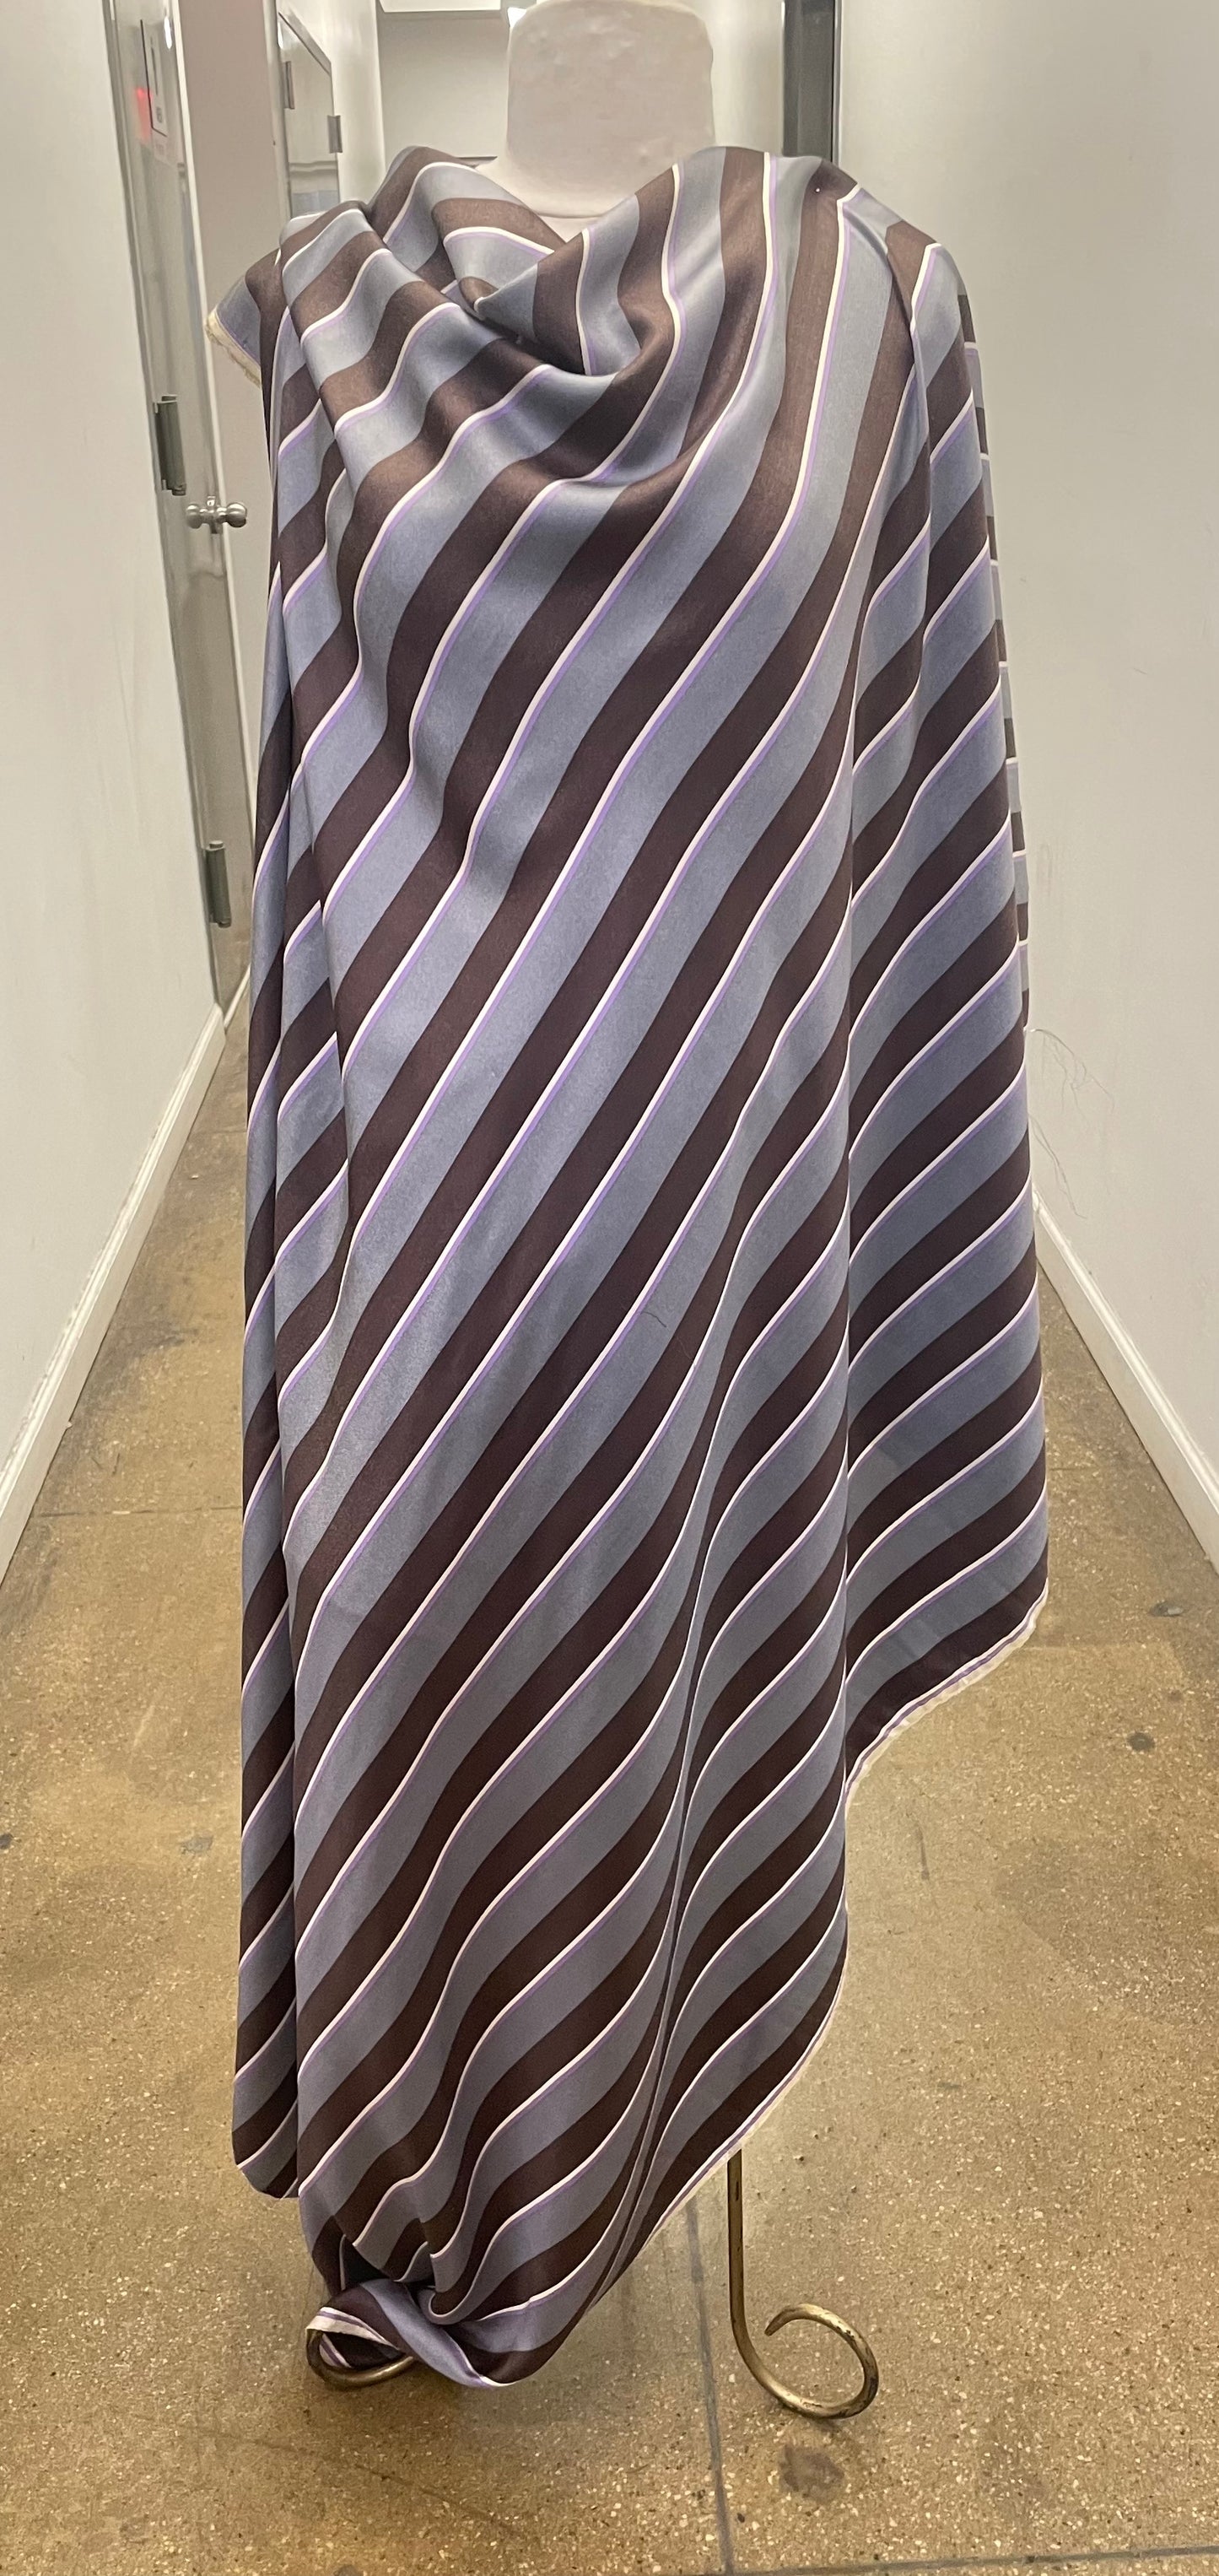 Silk Twill Stripe- Gray / Purple / Browns